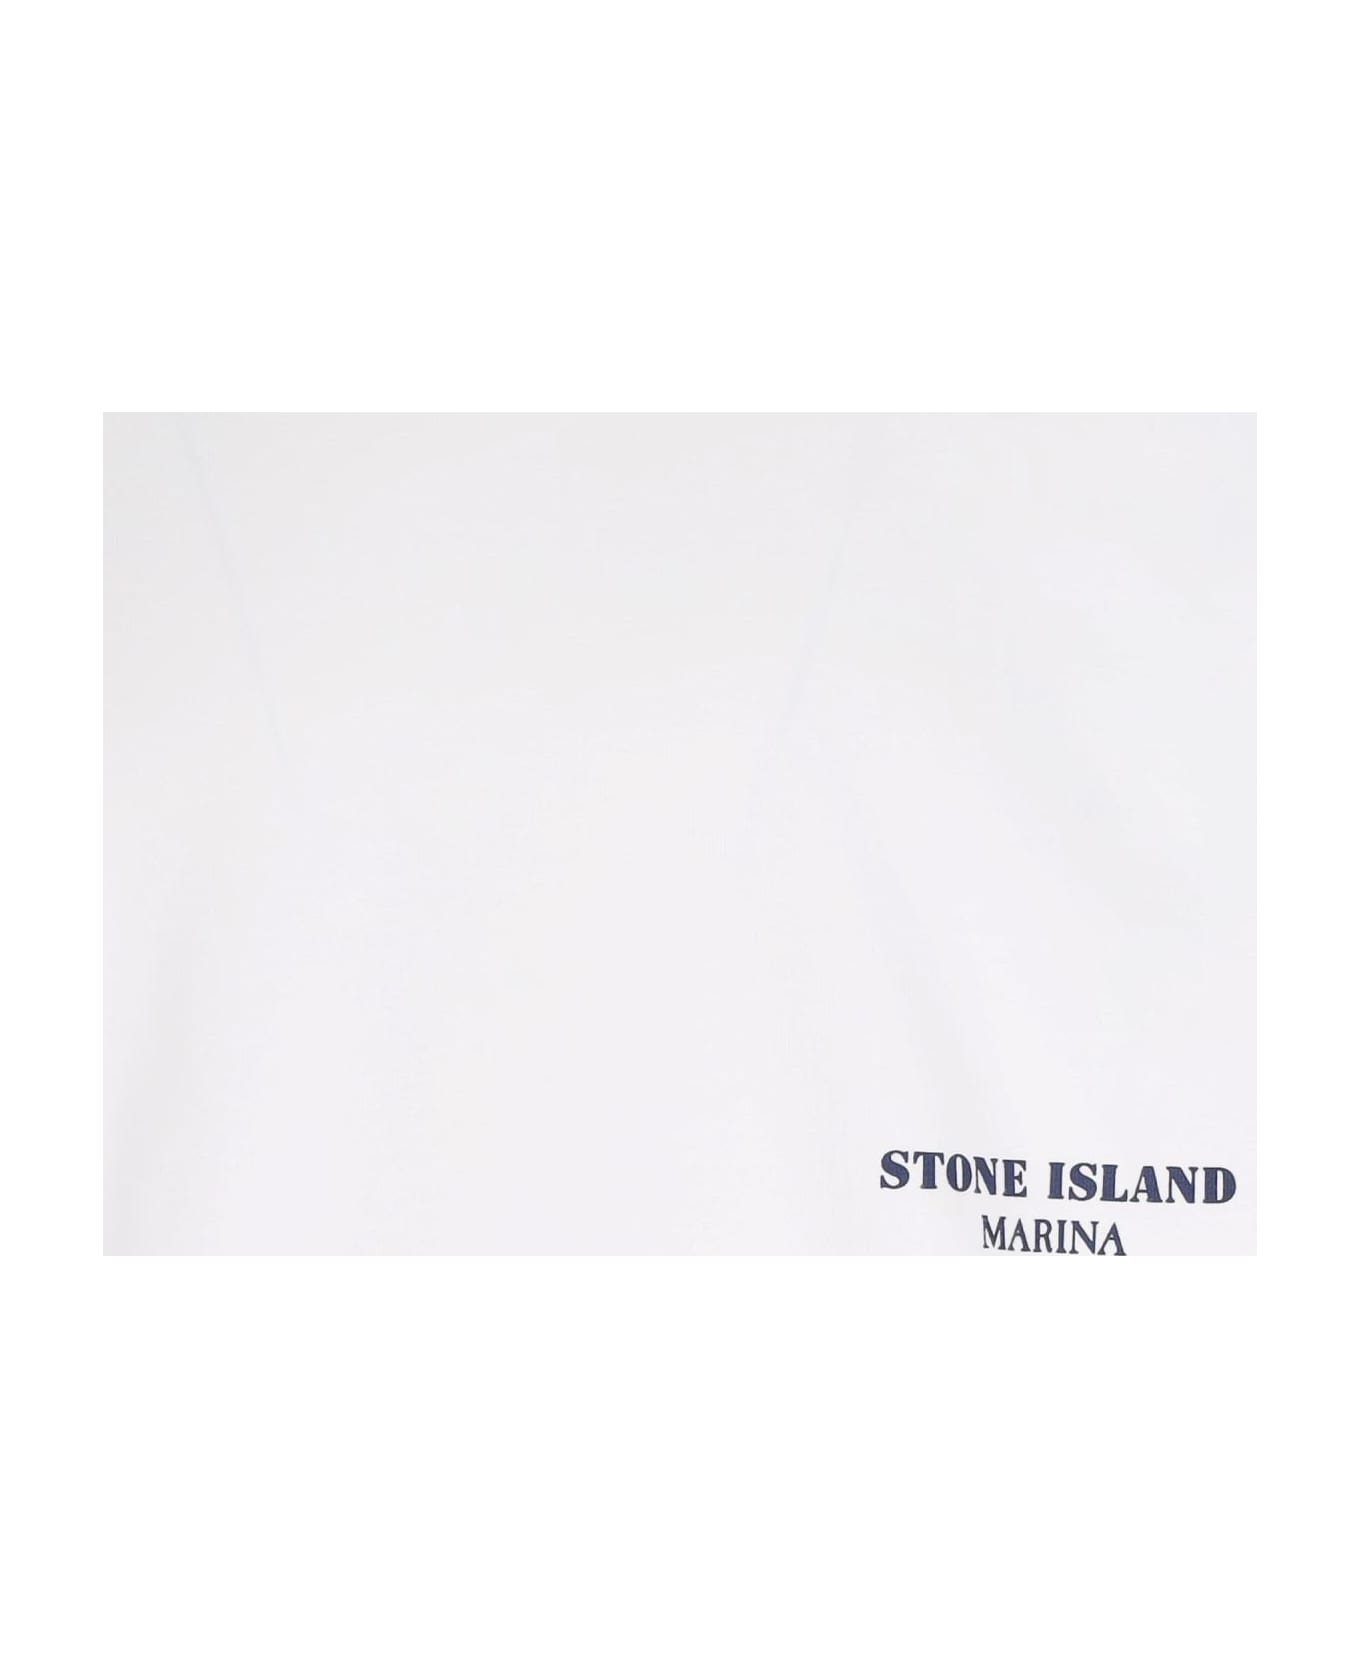 Stone Island 'marina' Crew Neck Sweatshirt フリース